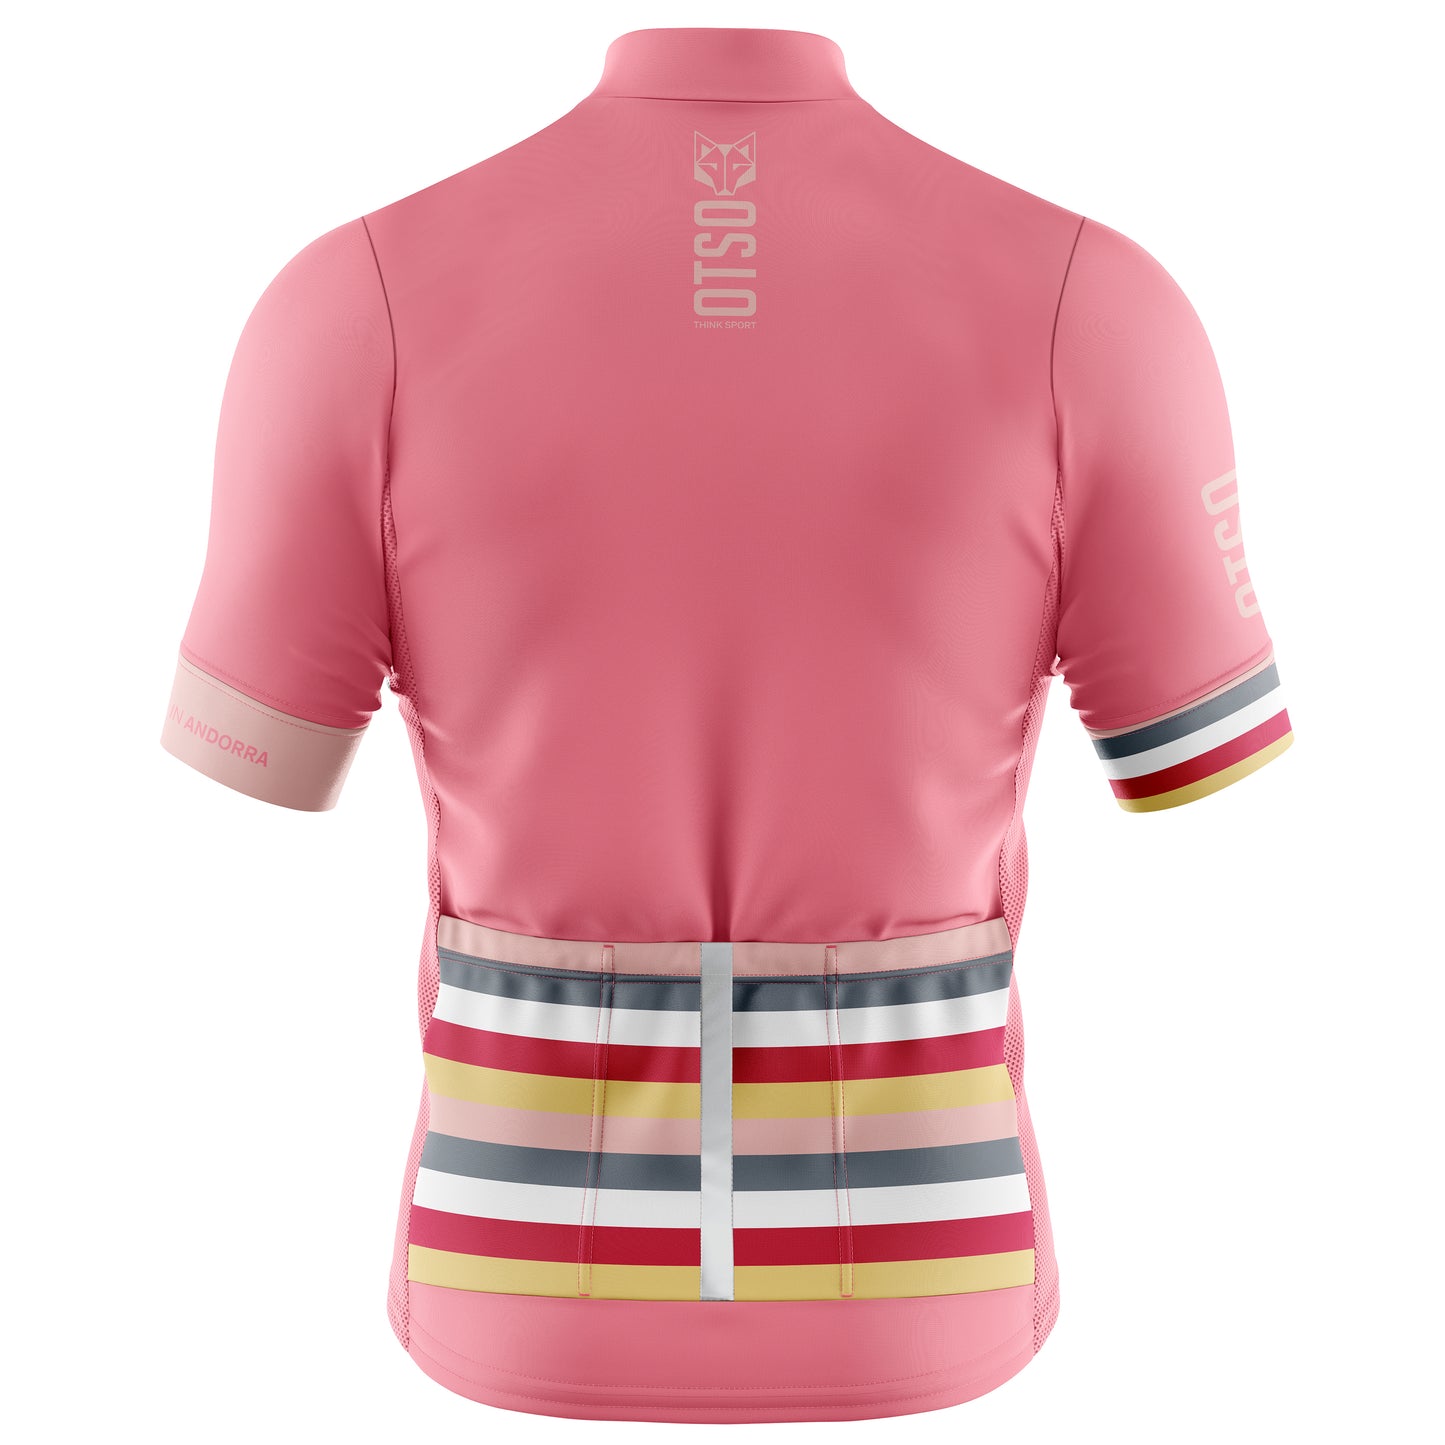 Maillot de ciclismo manga corta hombre - Stripes Coral Pink (Outlet)